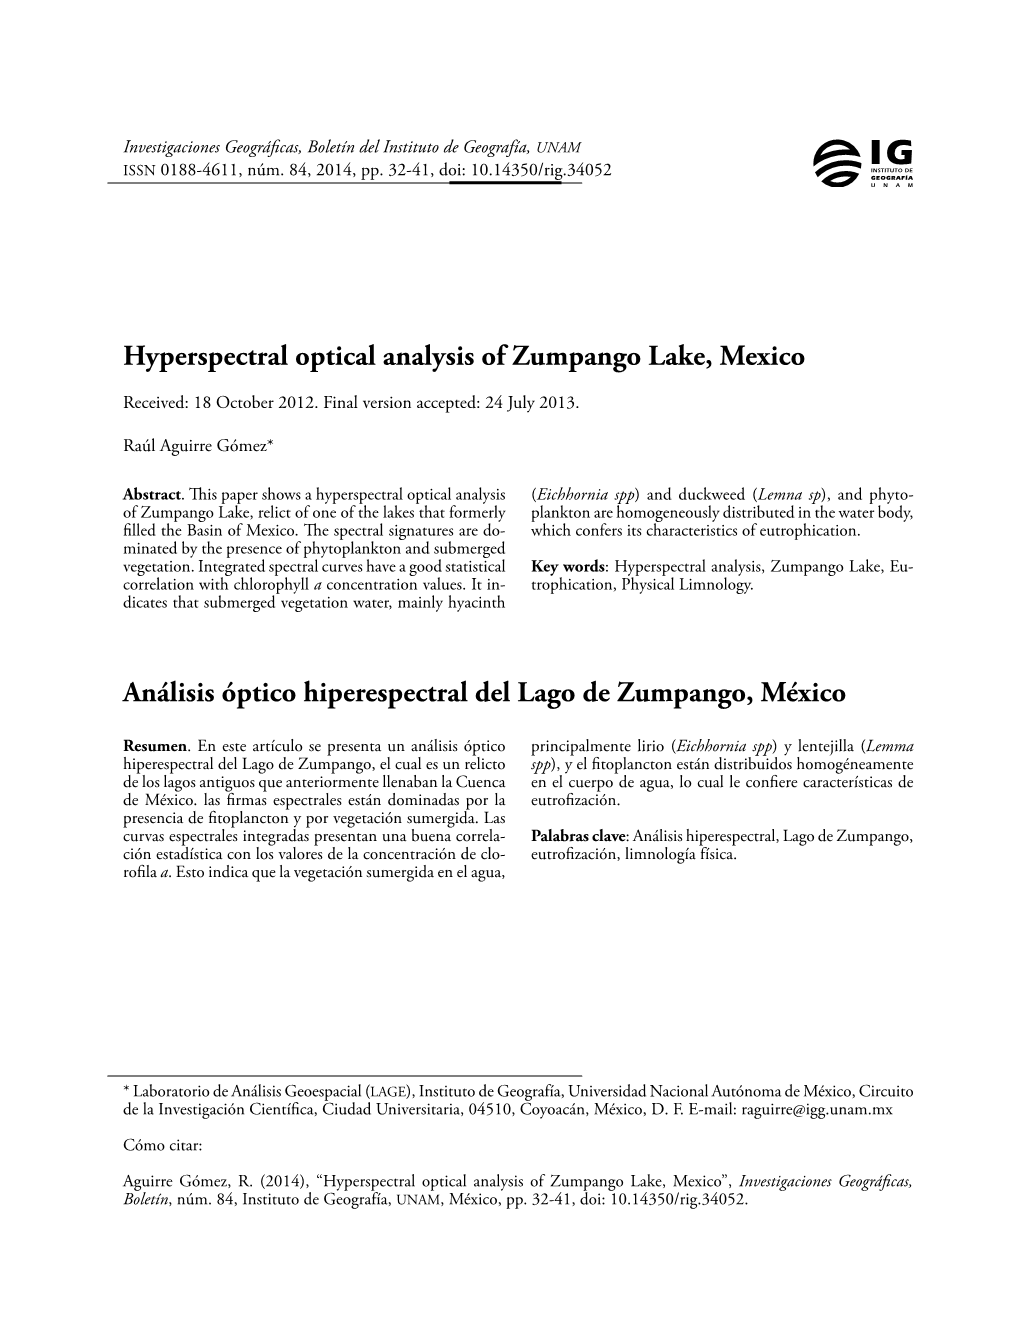 Hyperspectral Optical Analysis of Zumpango Lake, Mexico Análisis